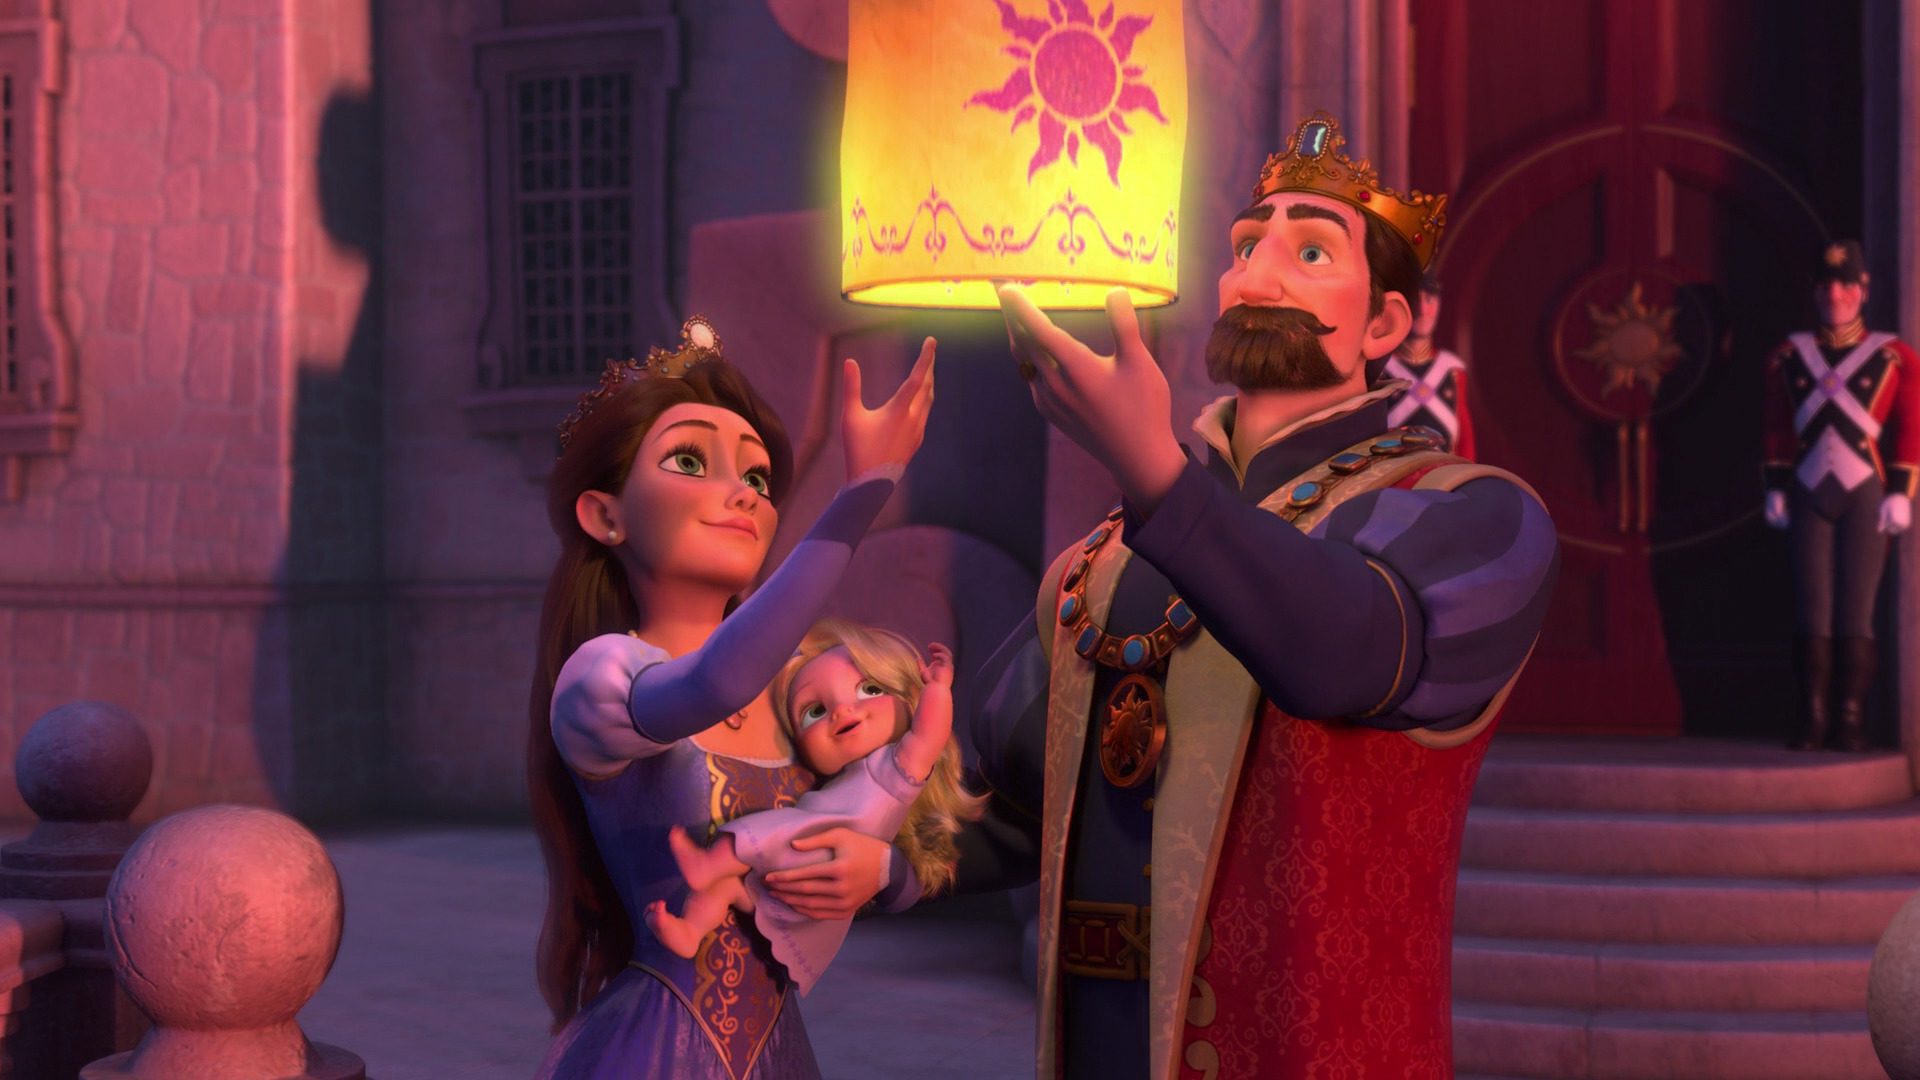 Rapunzel, Fisher Price Little People Disney Wiki